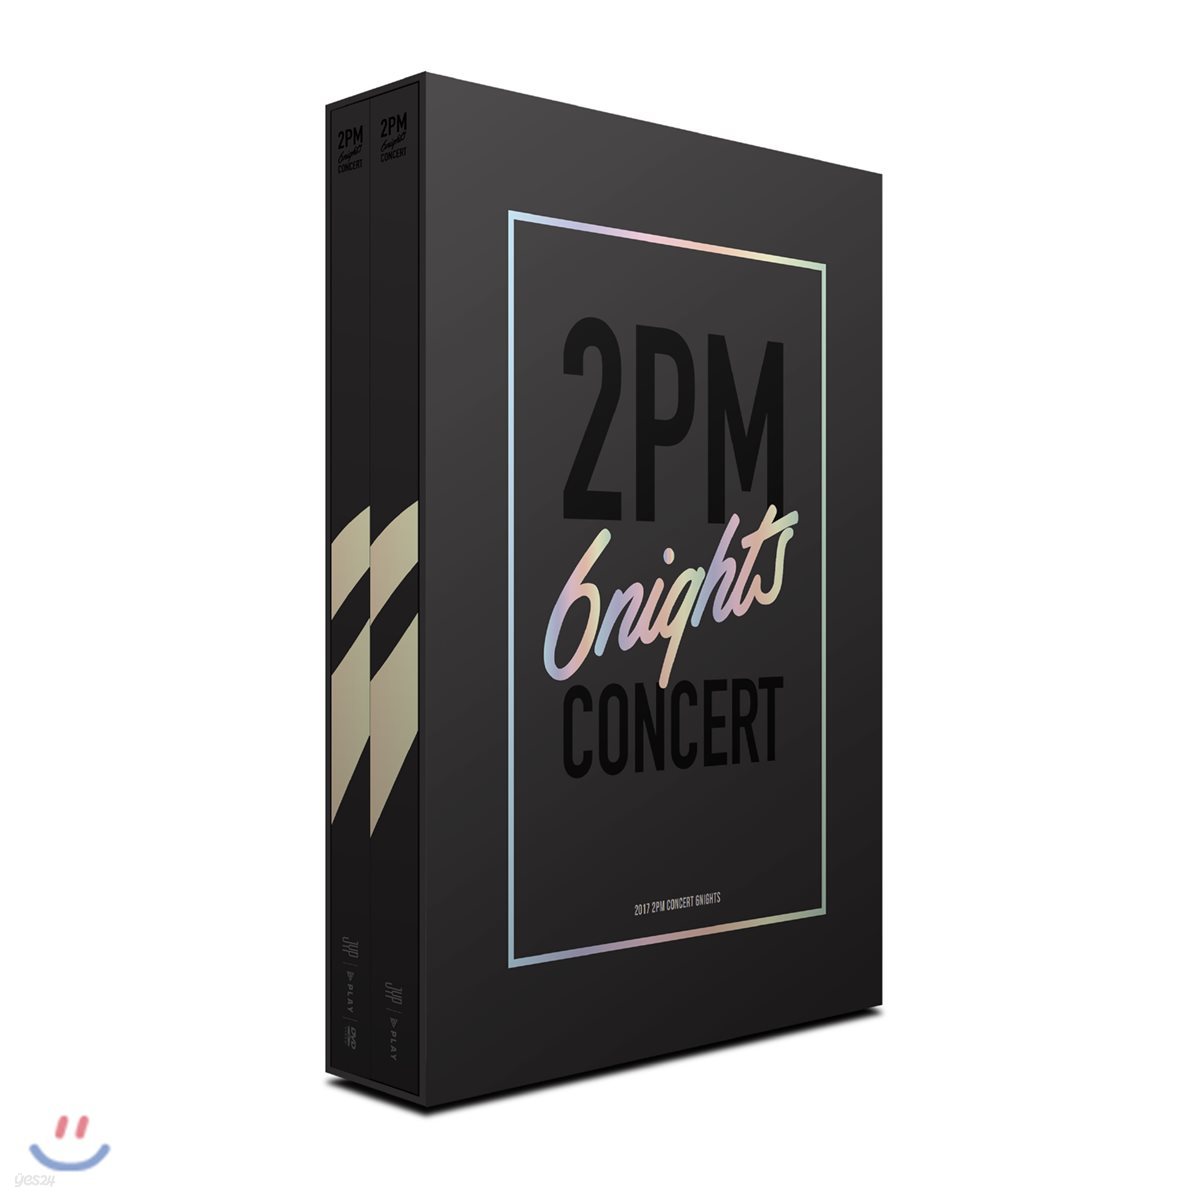 2PM - 2017 2PM Concert '6Nights' DVD